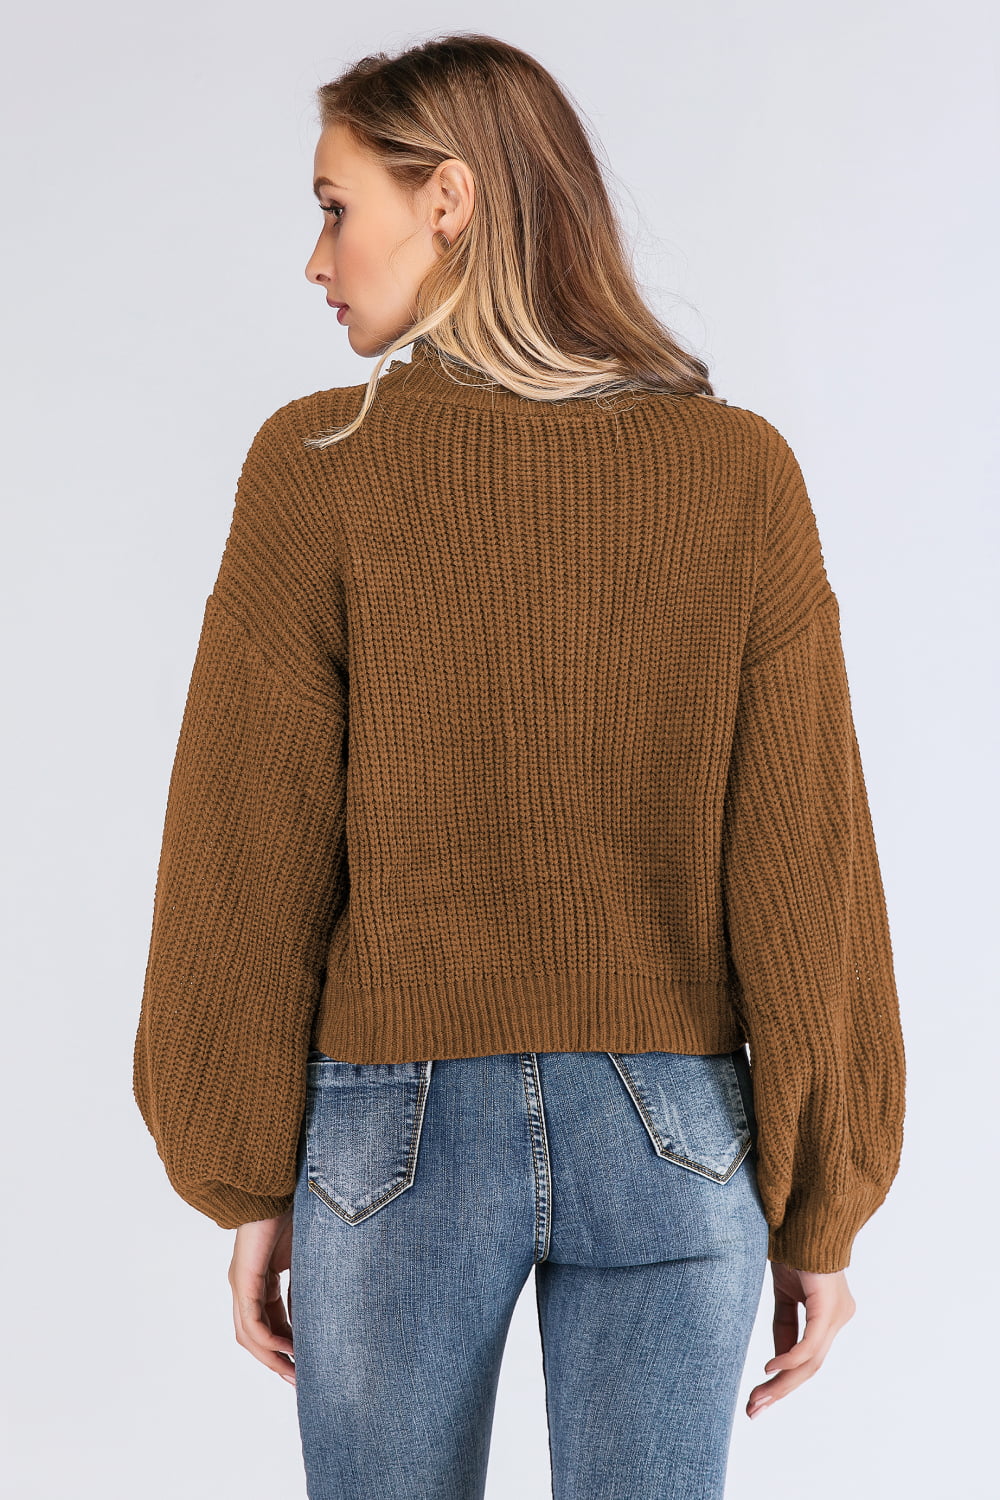 Double Take Turtleneck Rib-Knit Dropped Shoulder Sweater